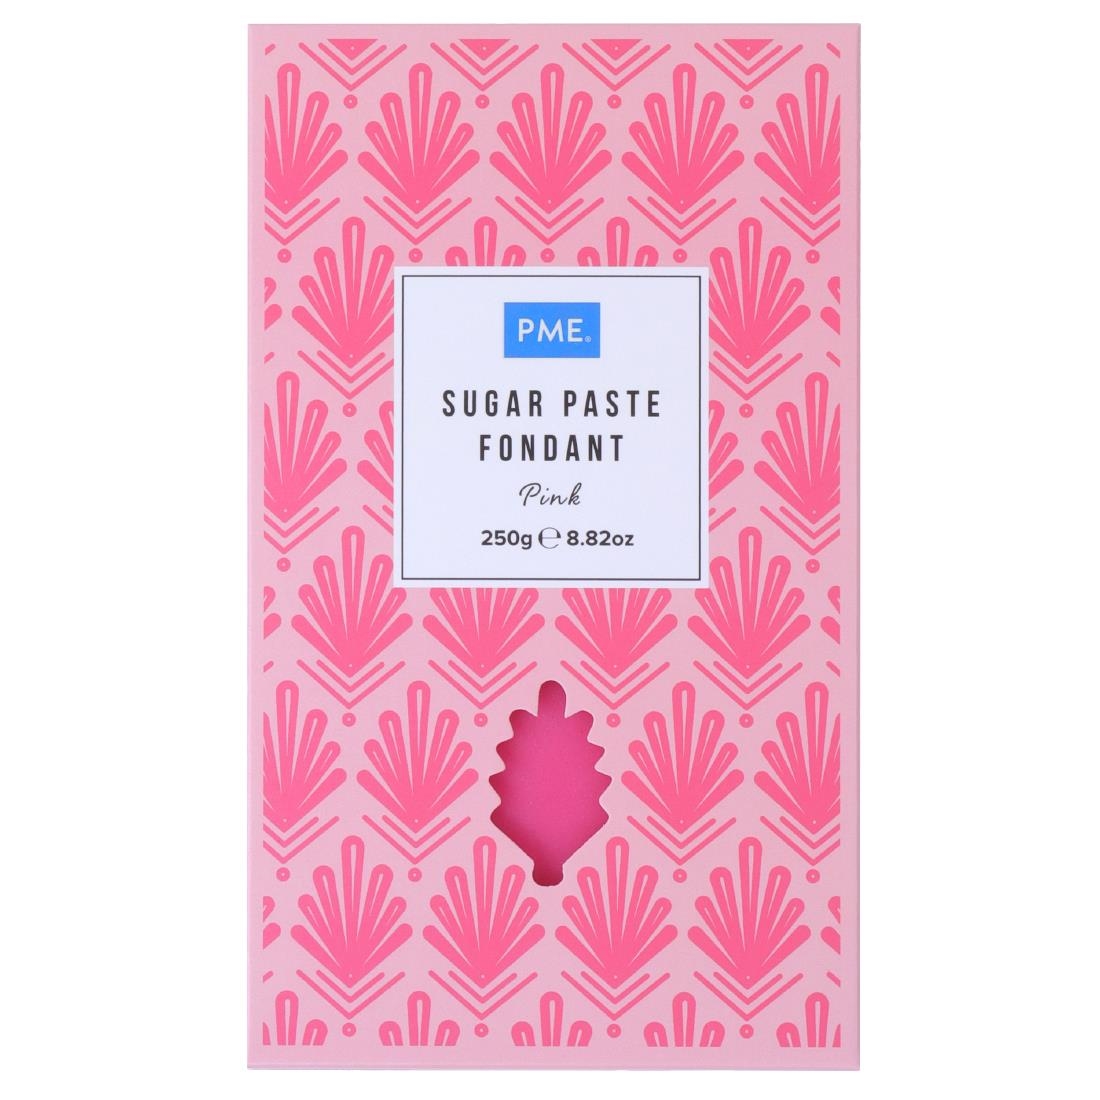 PME Sugar Paste Fondant Pink 250g (HU302)